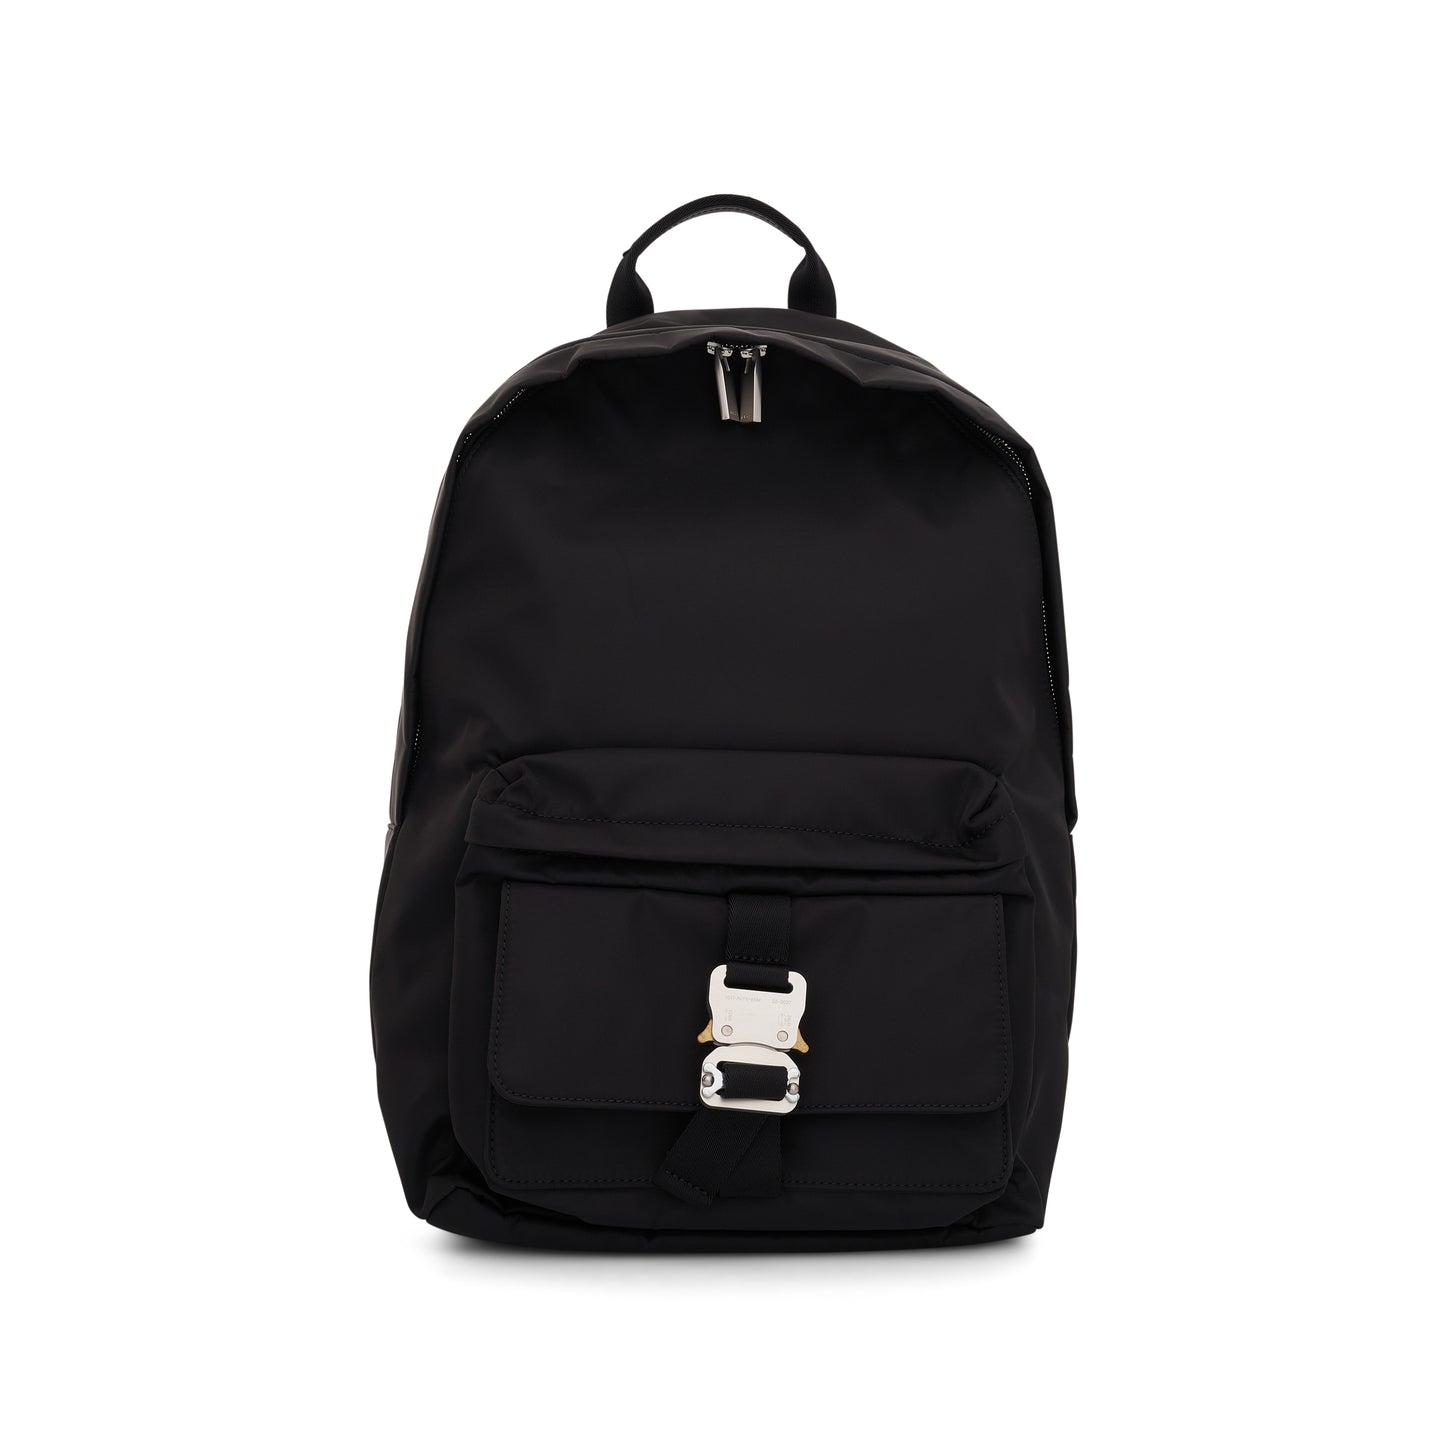 Backpack - X Backpack in Black/Silver